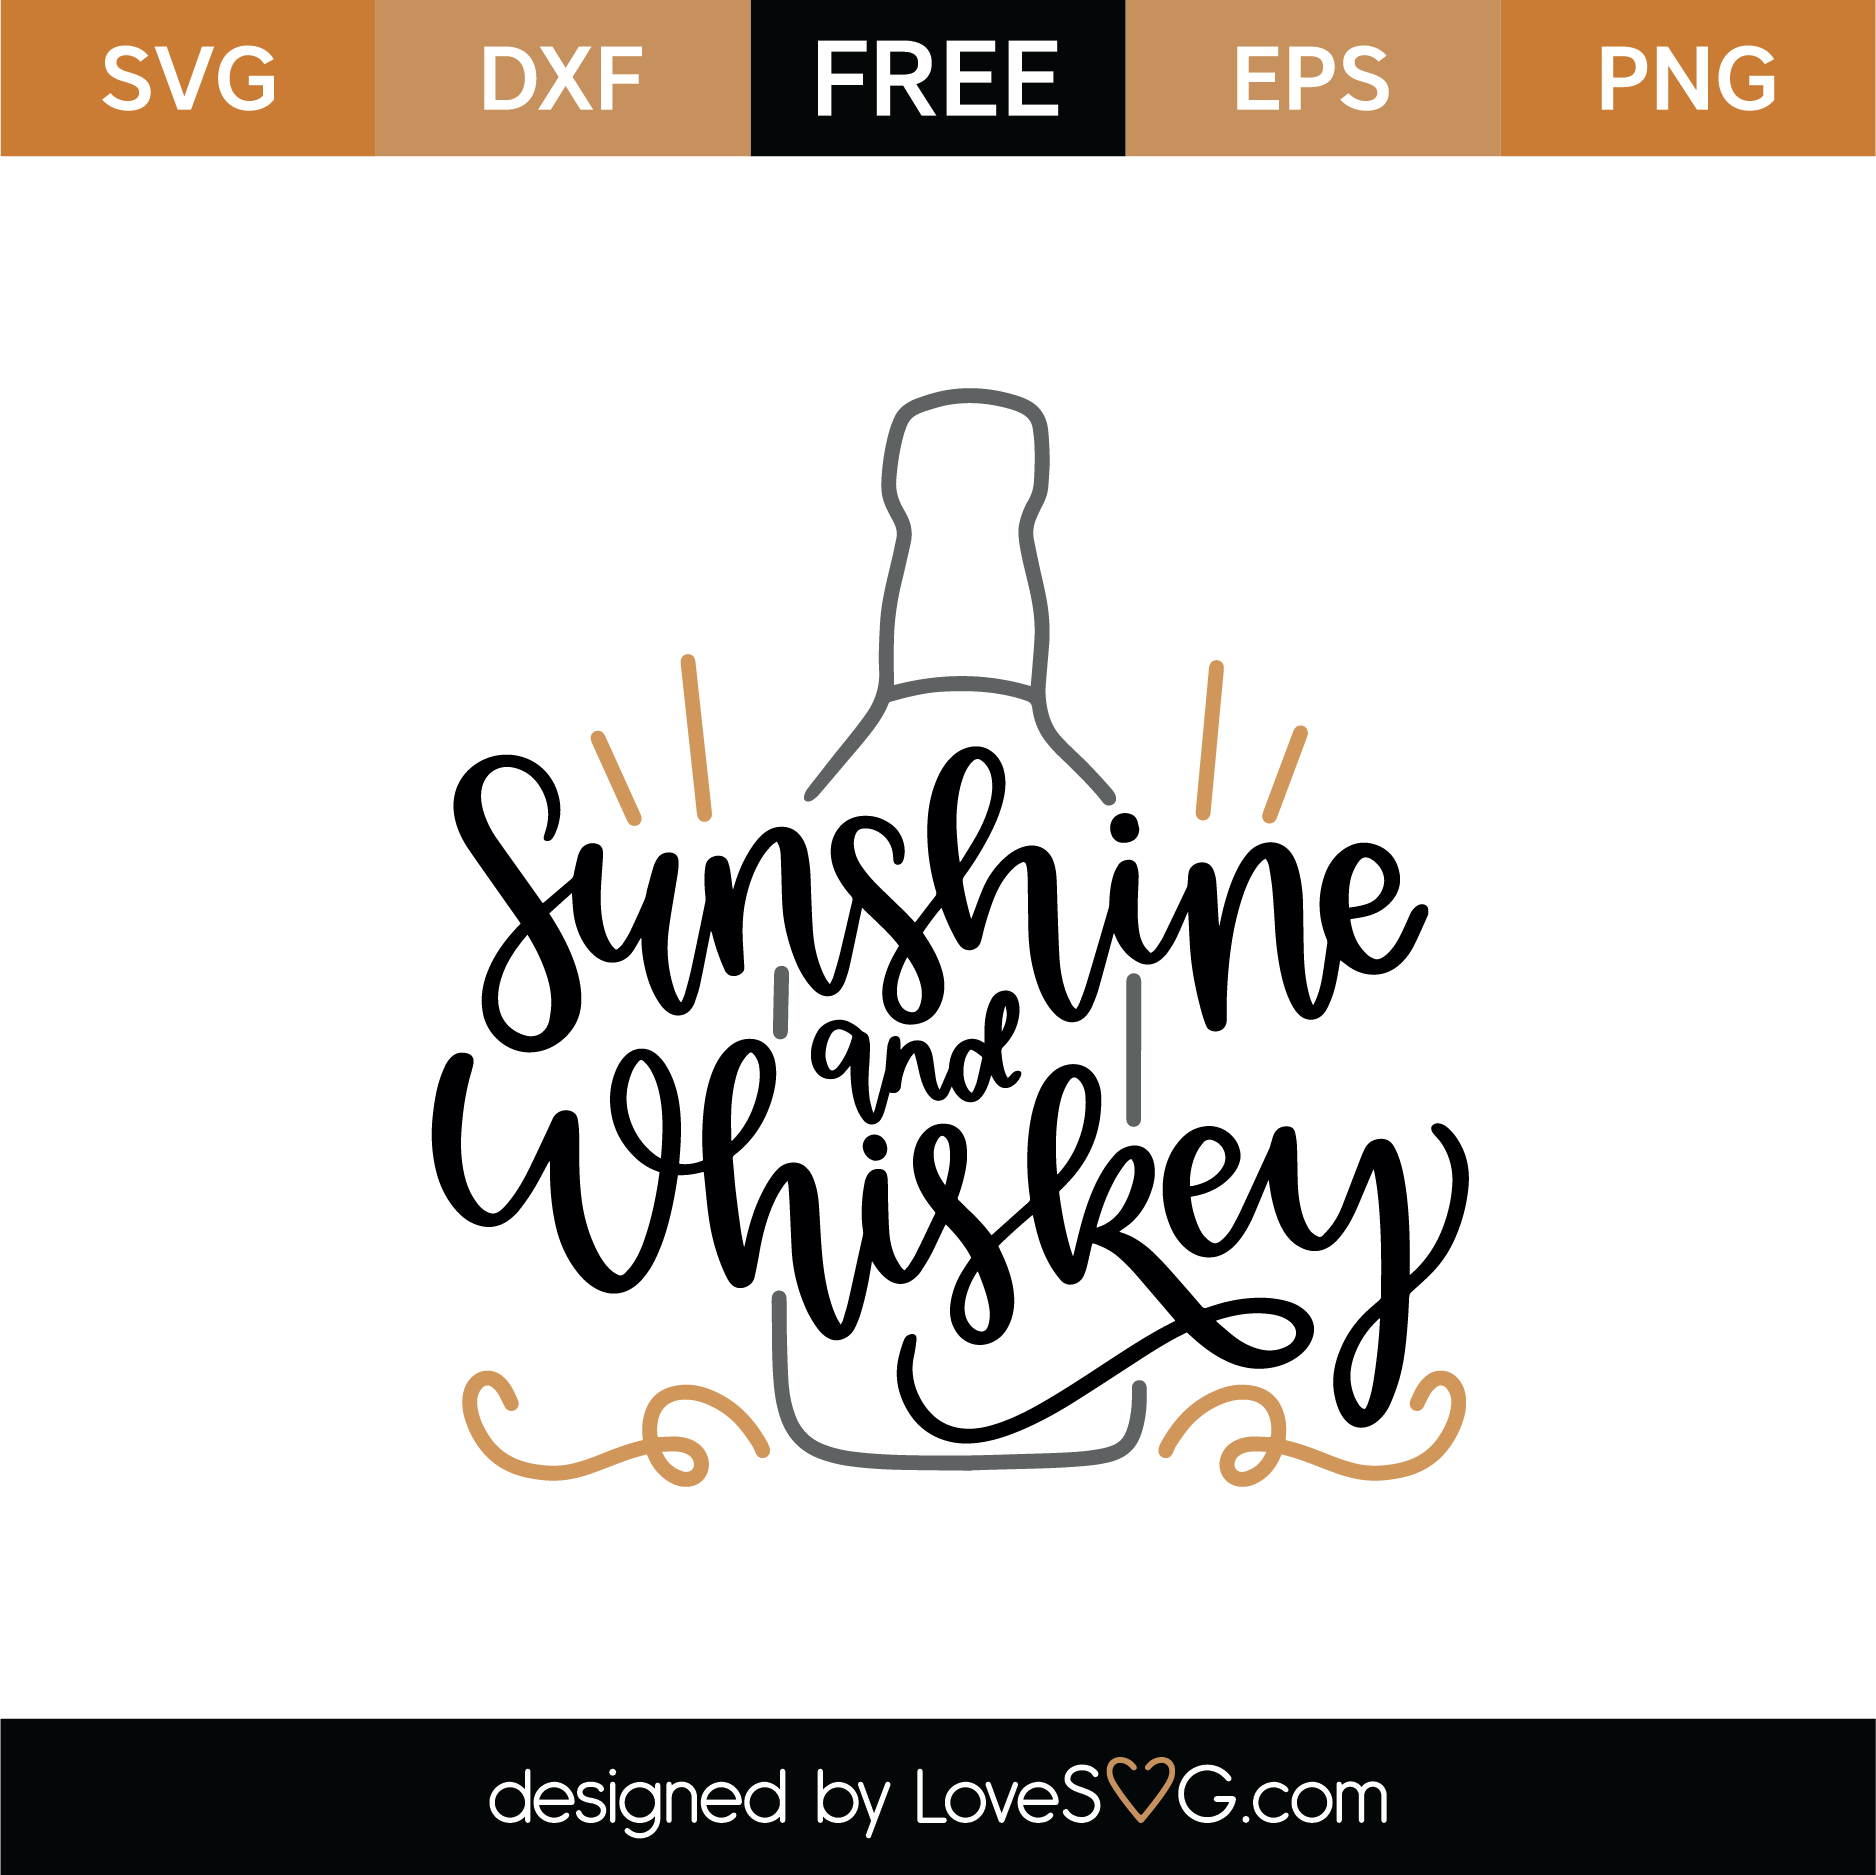 Download Free Sunshine and Whiskey SVG Cut File | Lovesvg.com